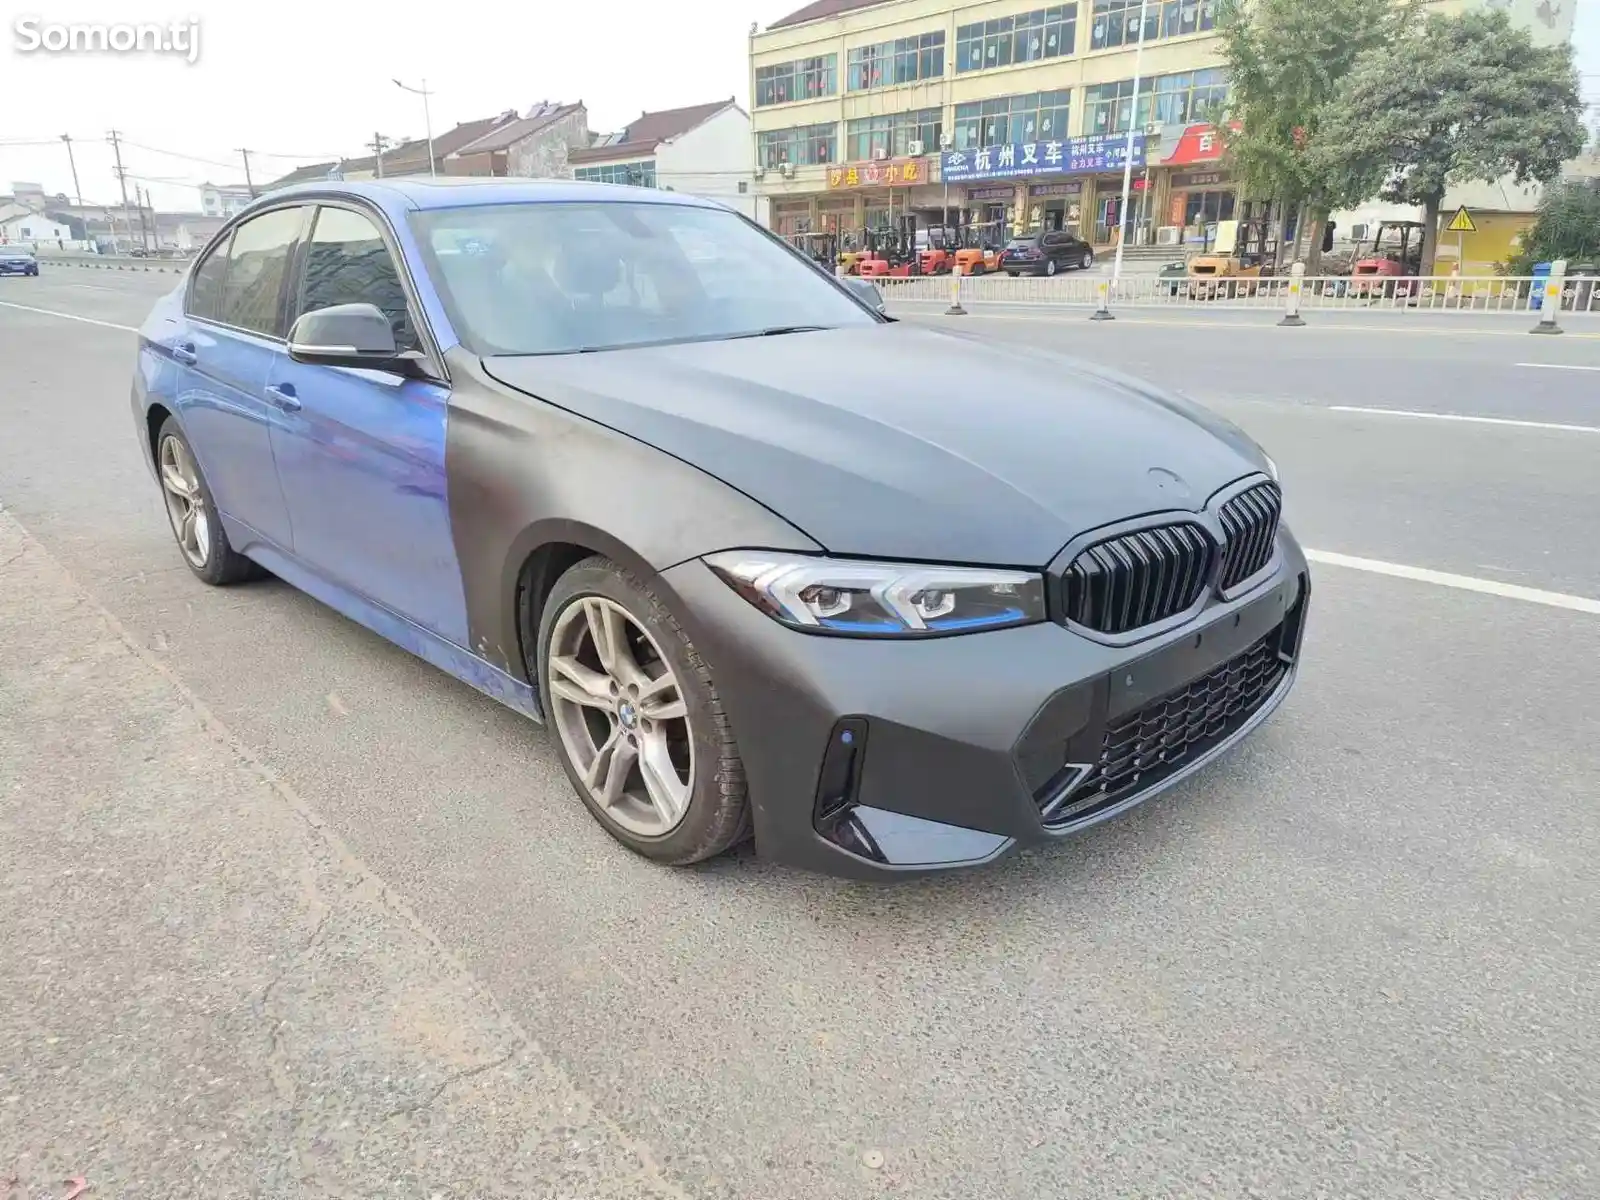 Комплект переделки BMW F30 на G20-1